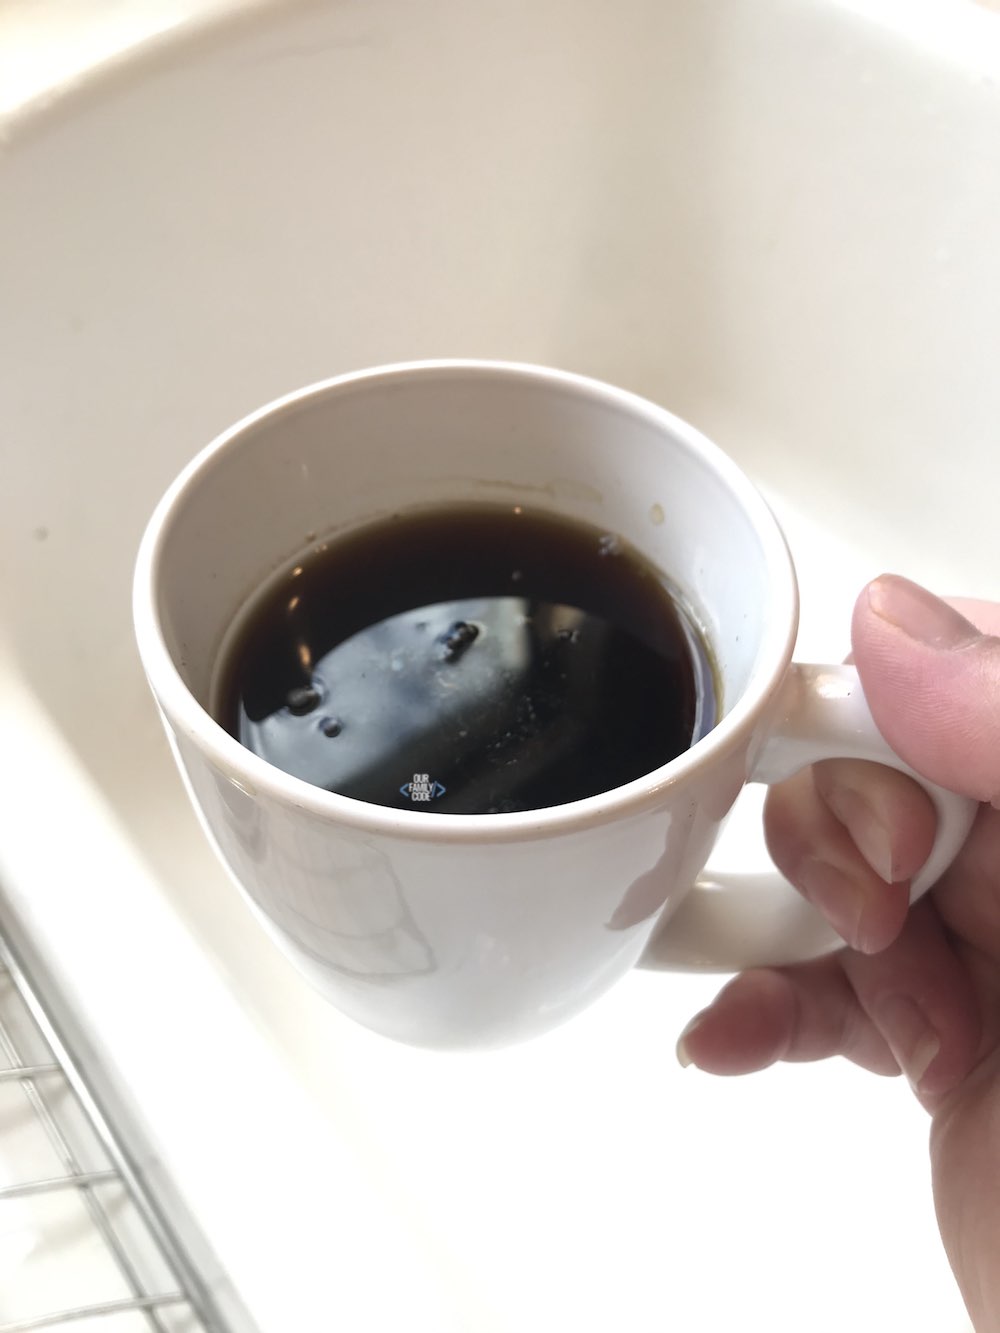 A picture of black tea in a mug.